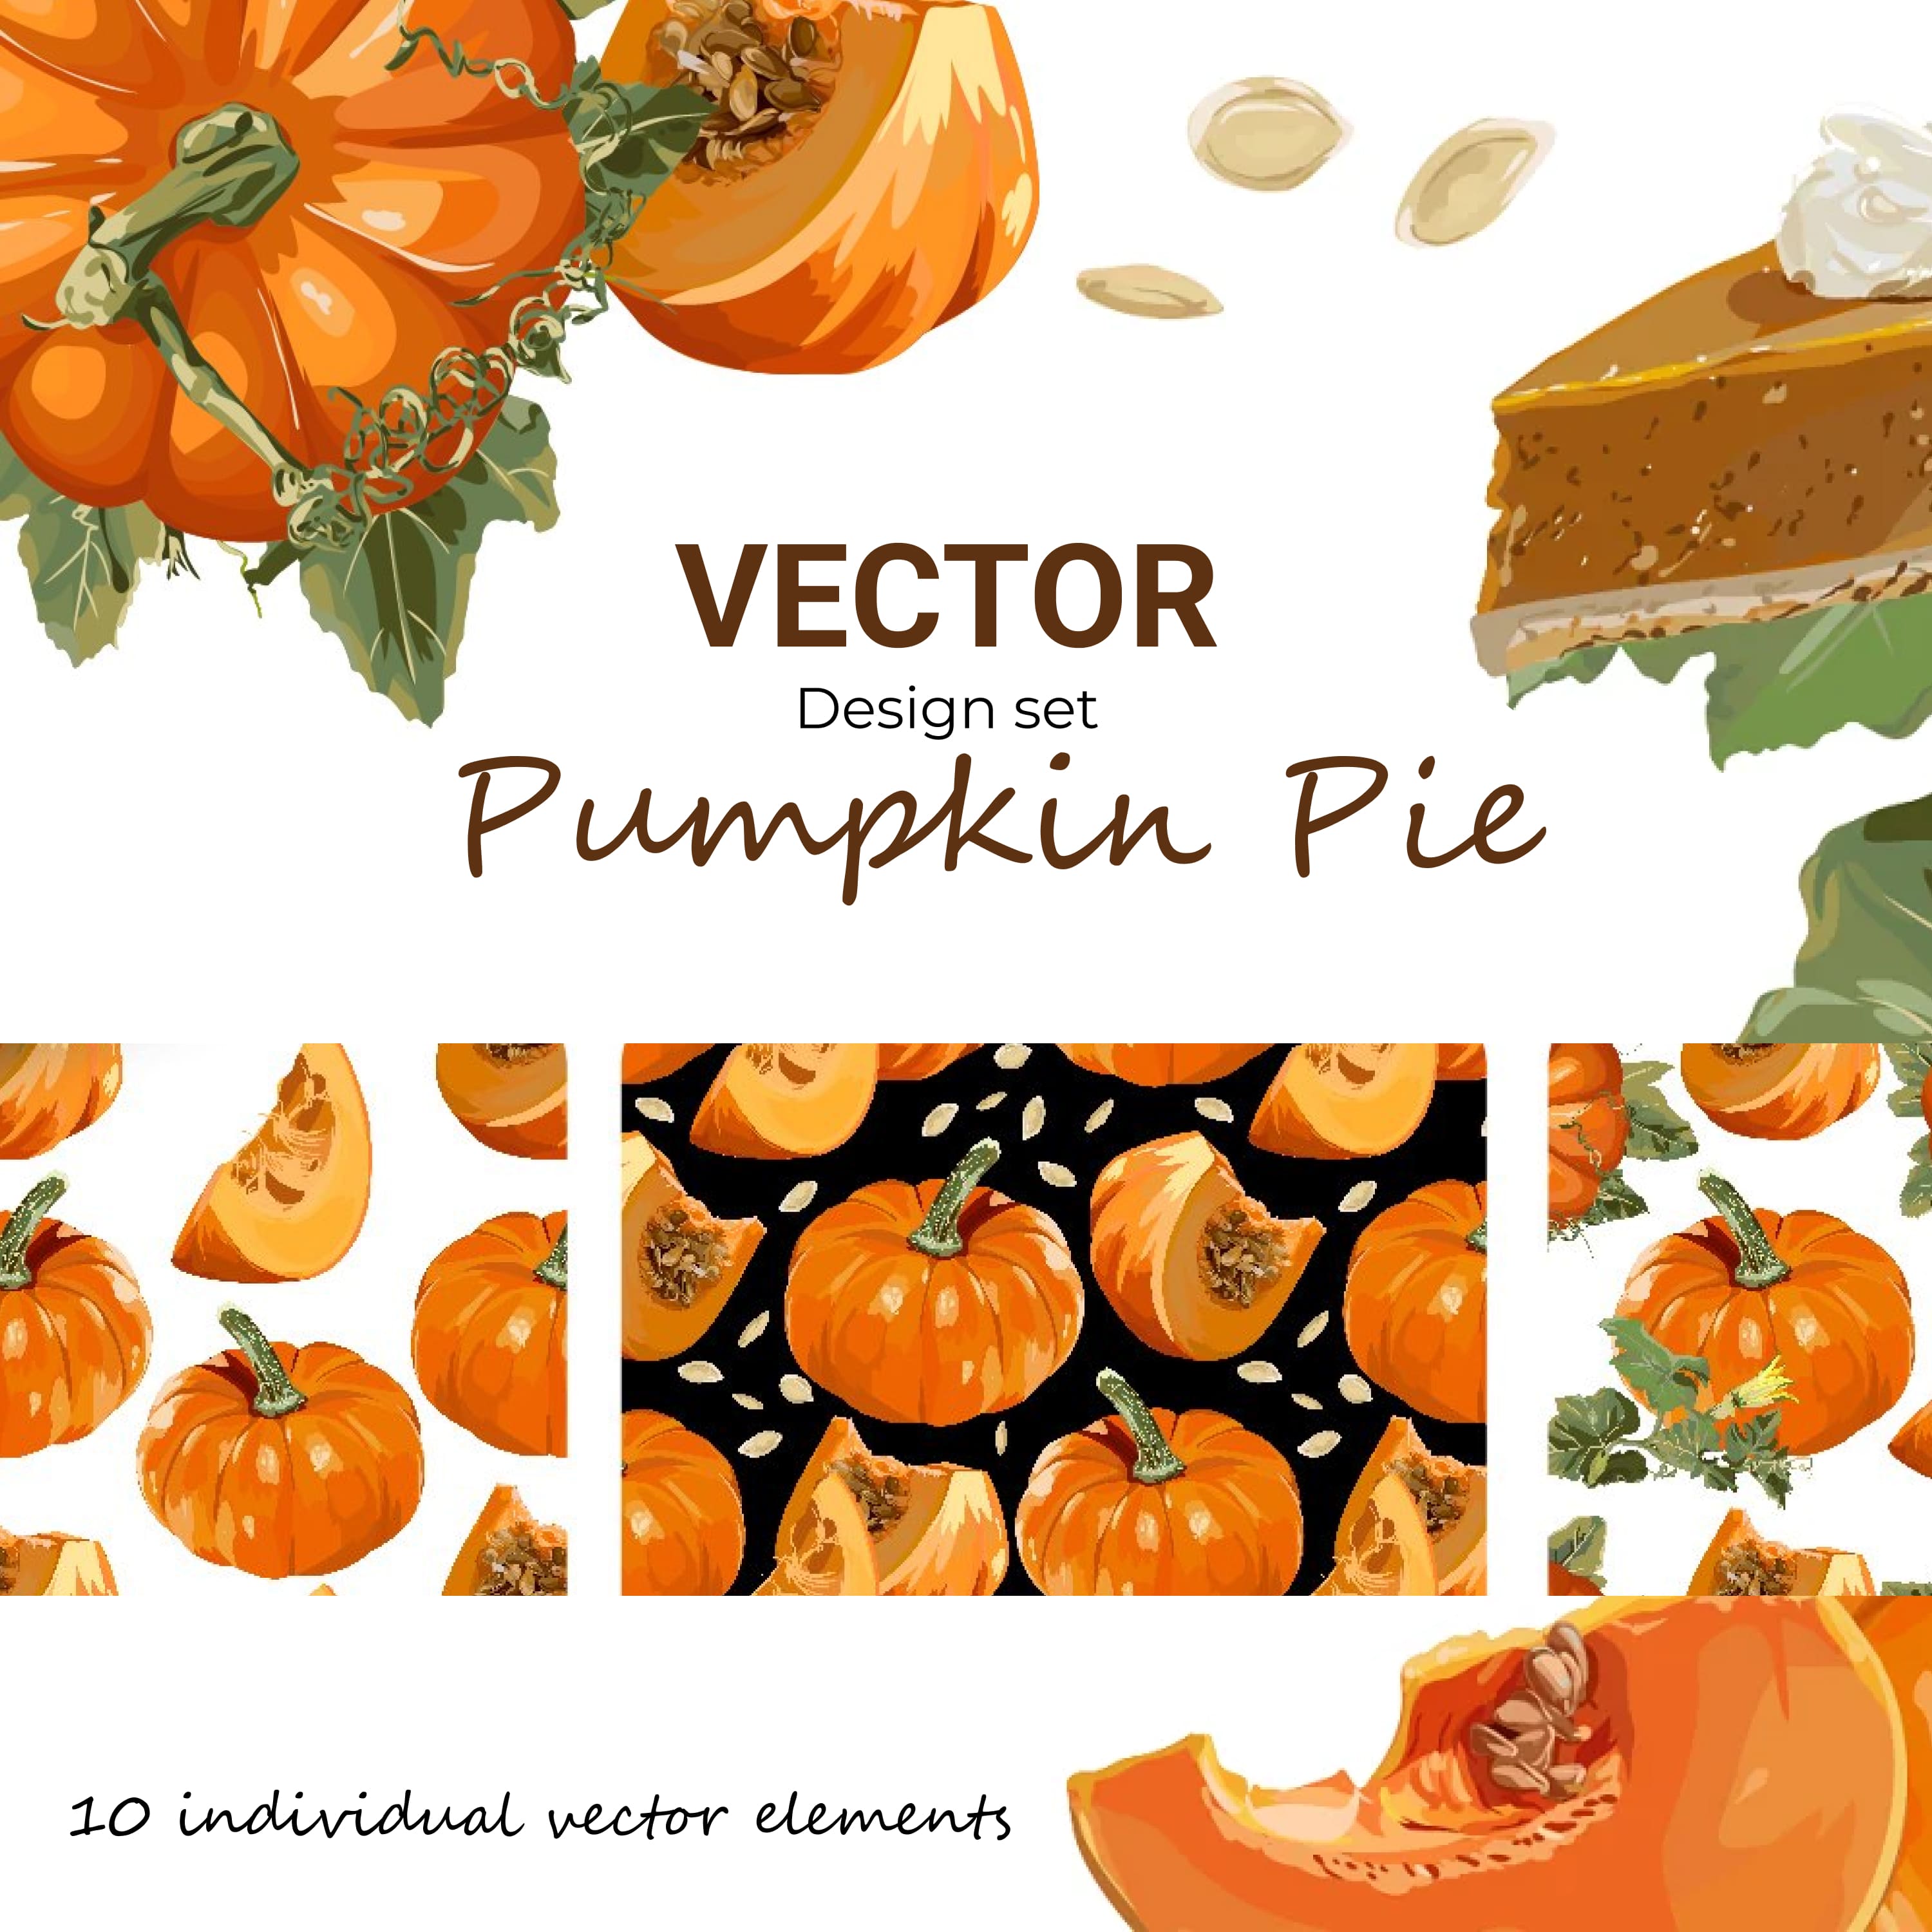 Pumpkin Pie Design Set cover.